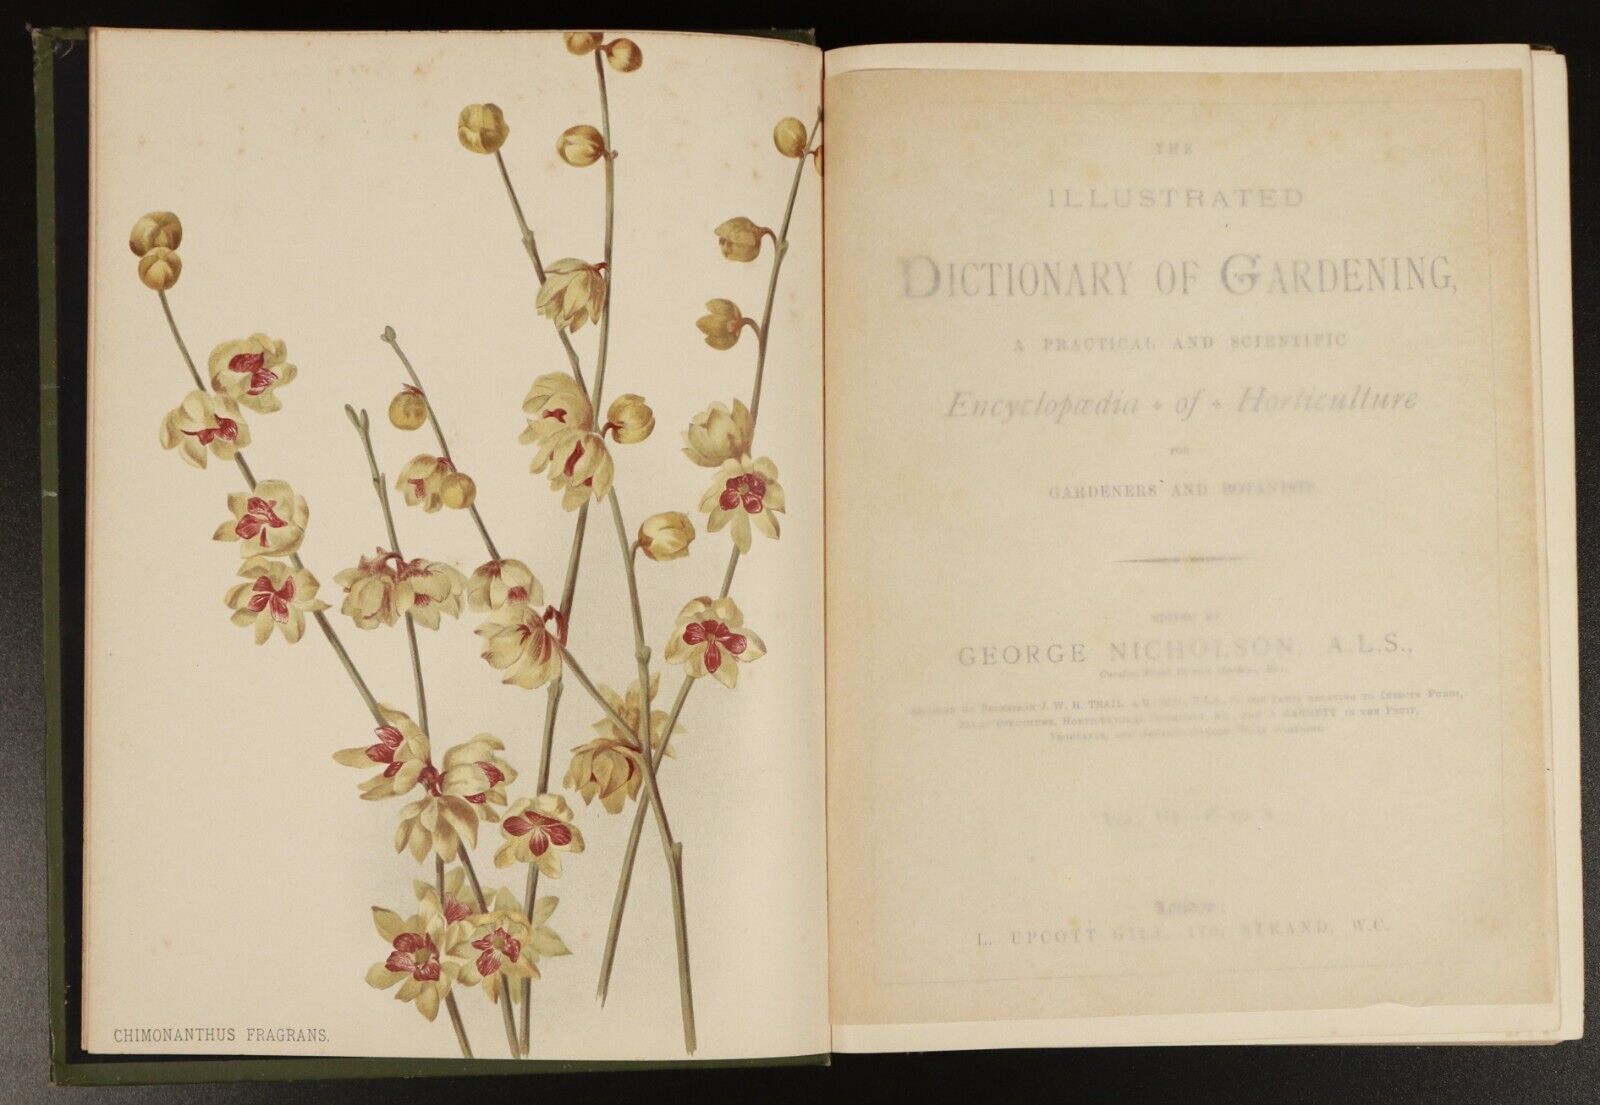 1888 4vol Illustrated Dictionary Of Gardening Antiquarian Gardening Book Set